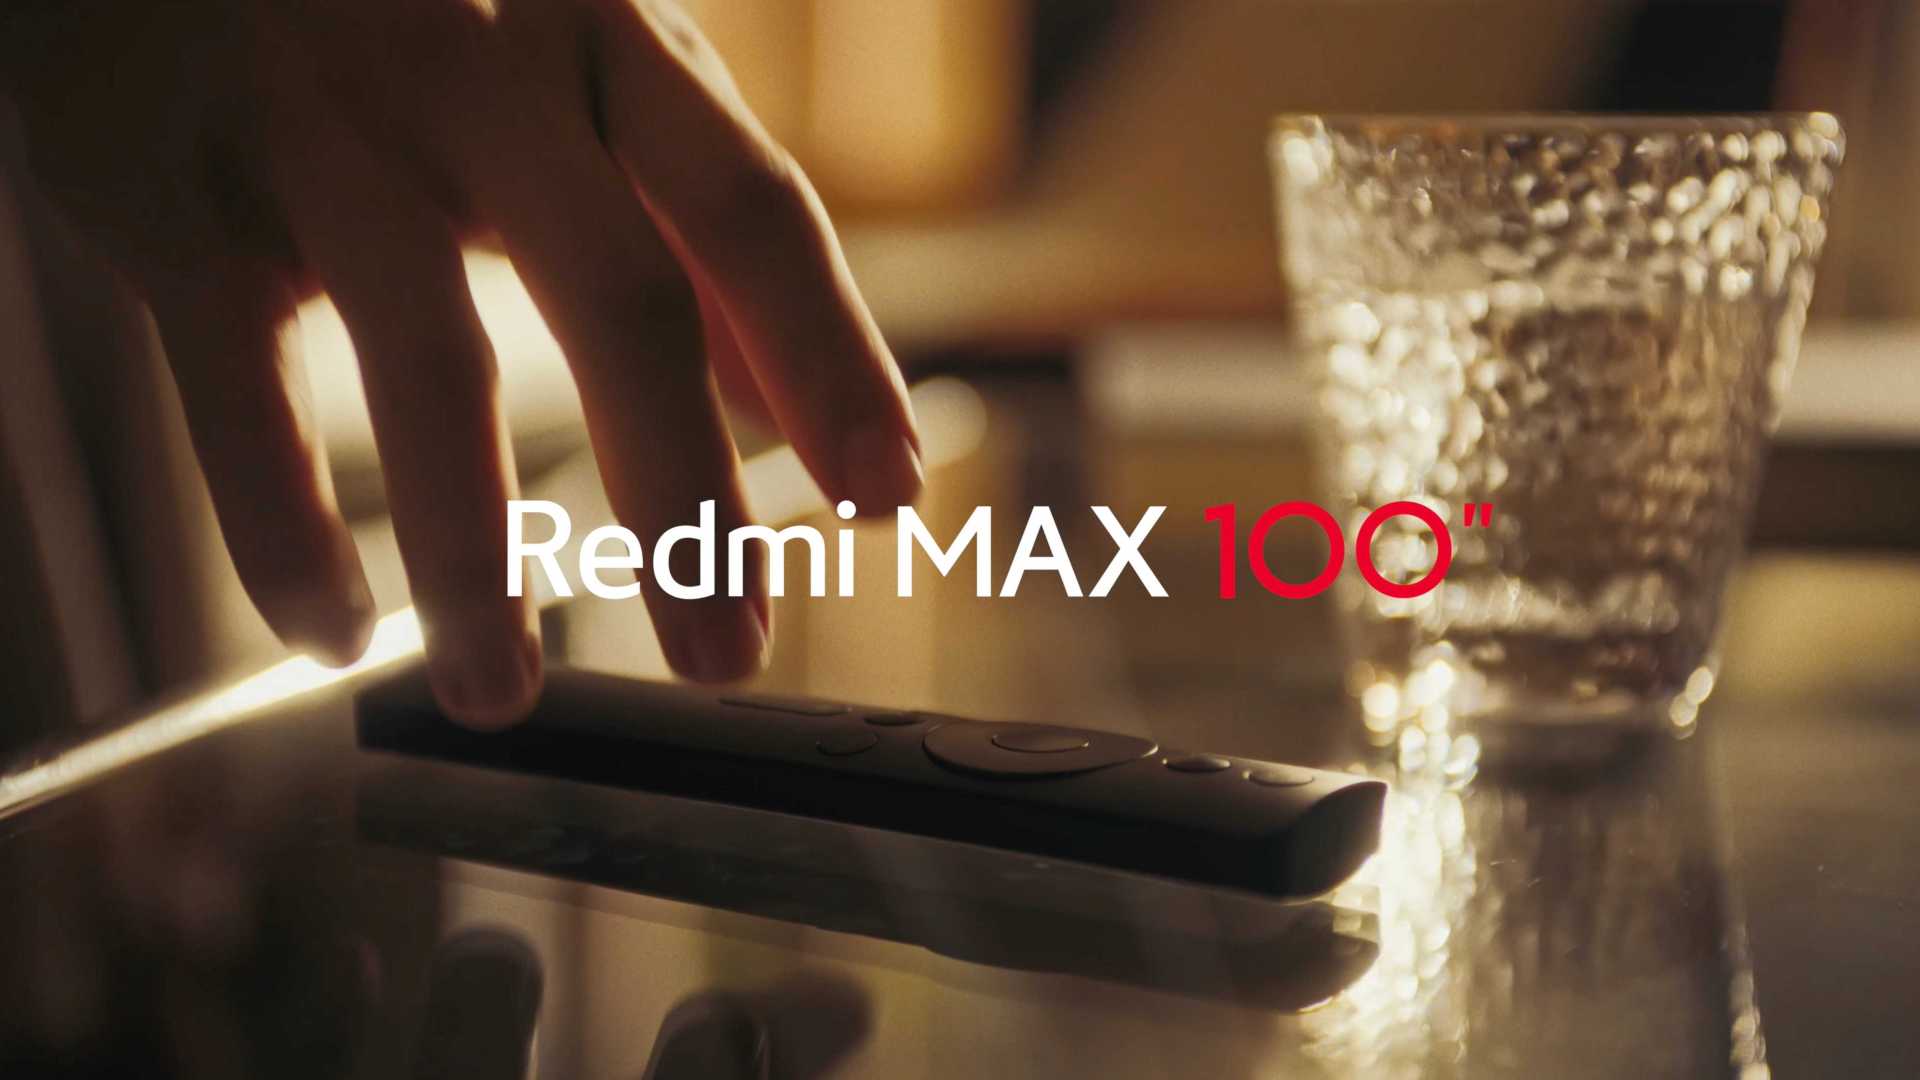 Redmi MAX 100" TV 产品视频